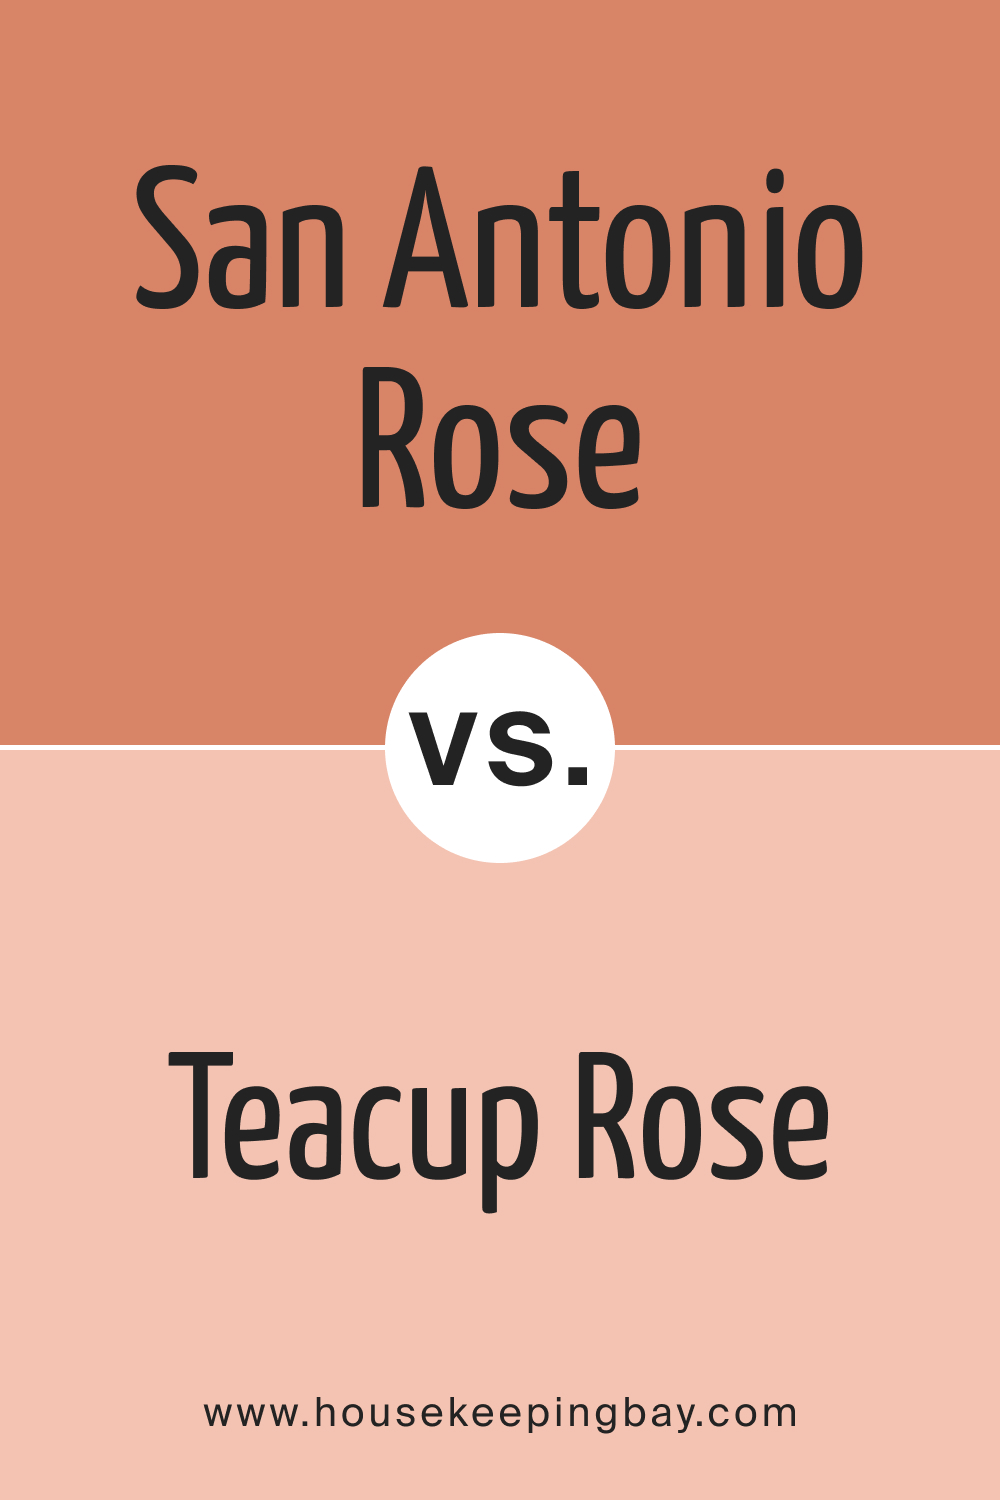 San Antonio Rose 027 vs. BM 2170 50 Teacup Rose